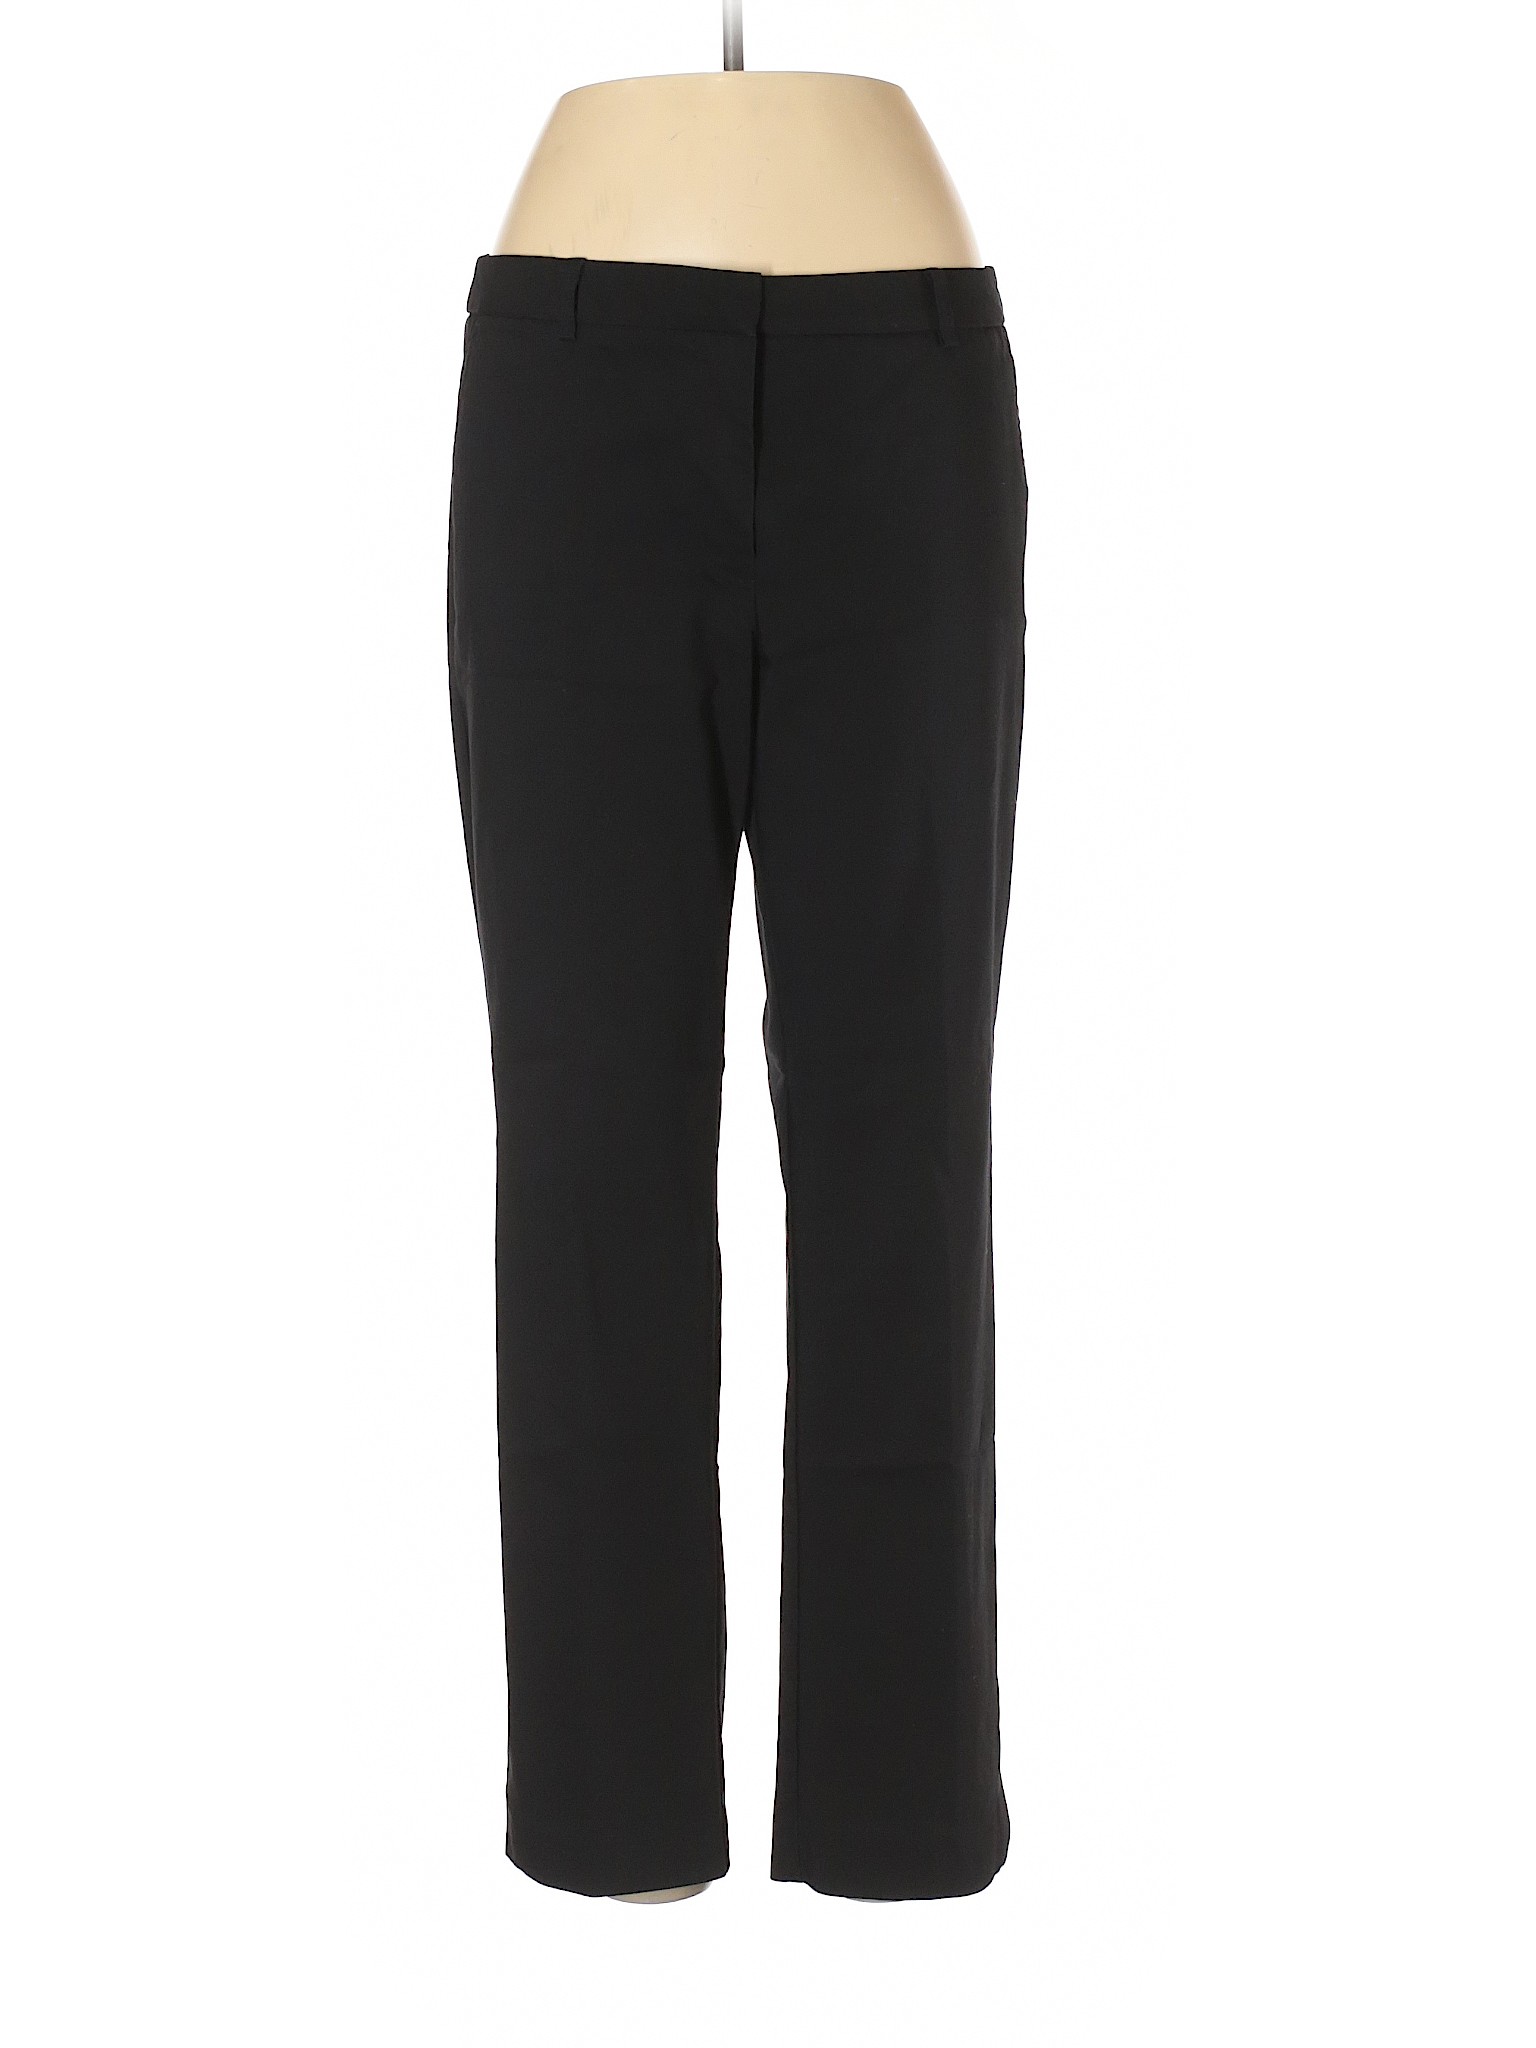 Jones New York Women Black Dress Pants 10 | eBay